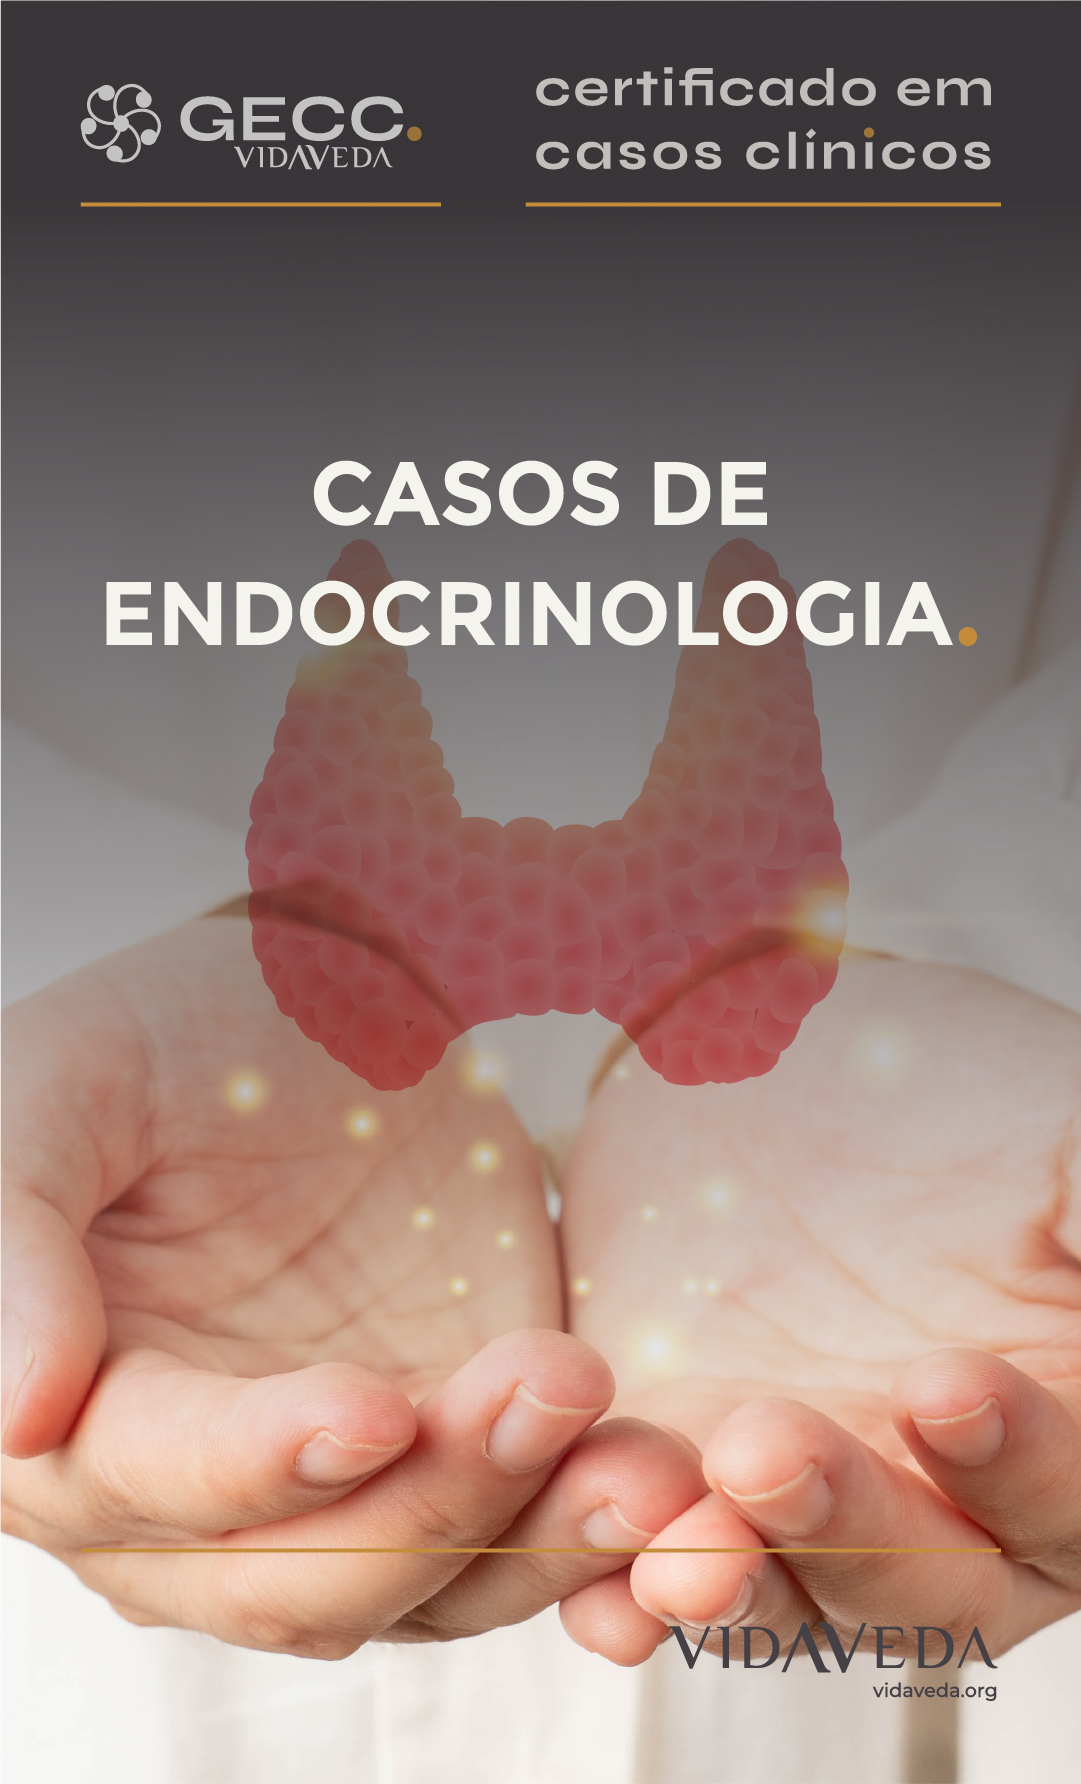 GECC - CASOS DE ENDOCRINOLOGIA